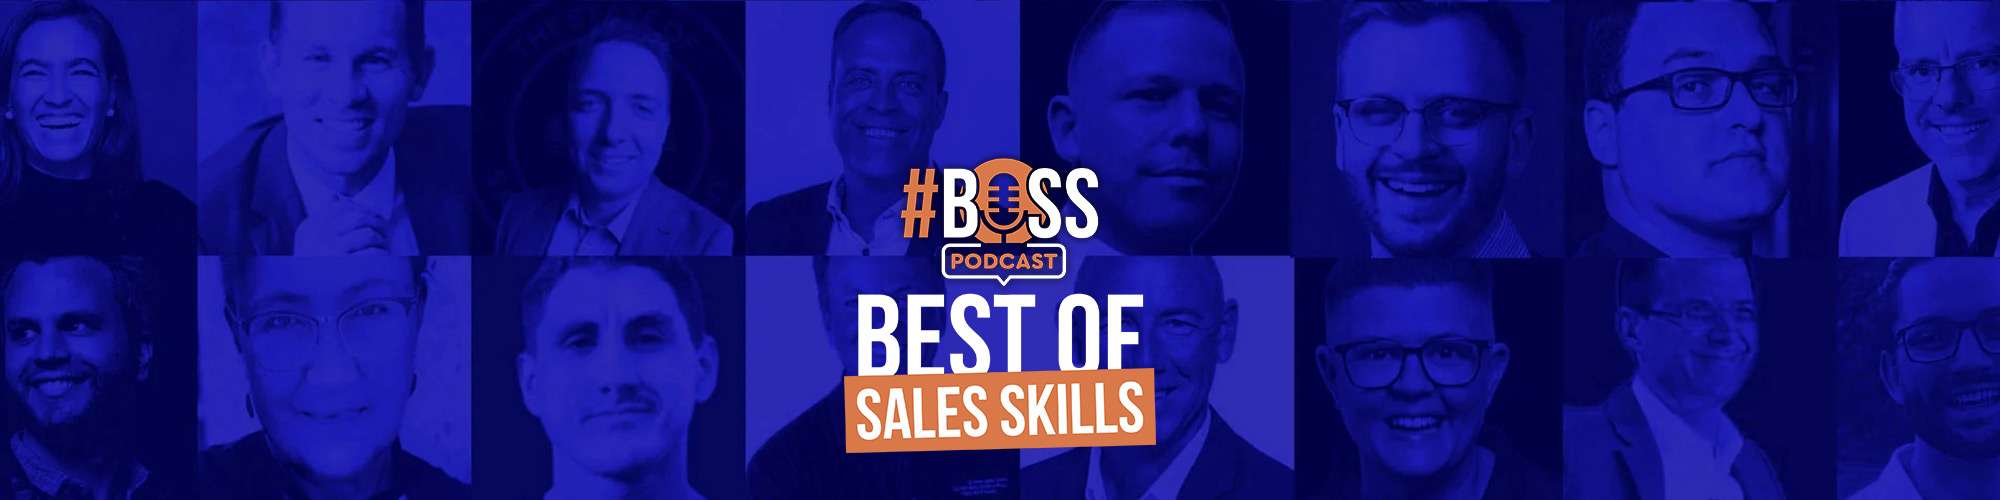 SaaS Boss Podcast Listeners